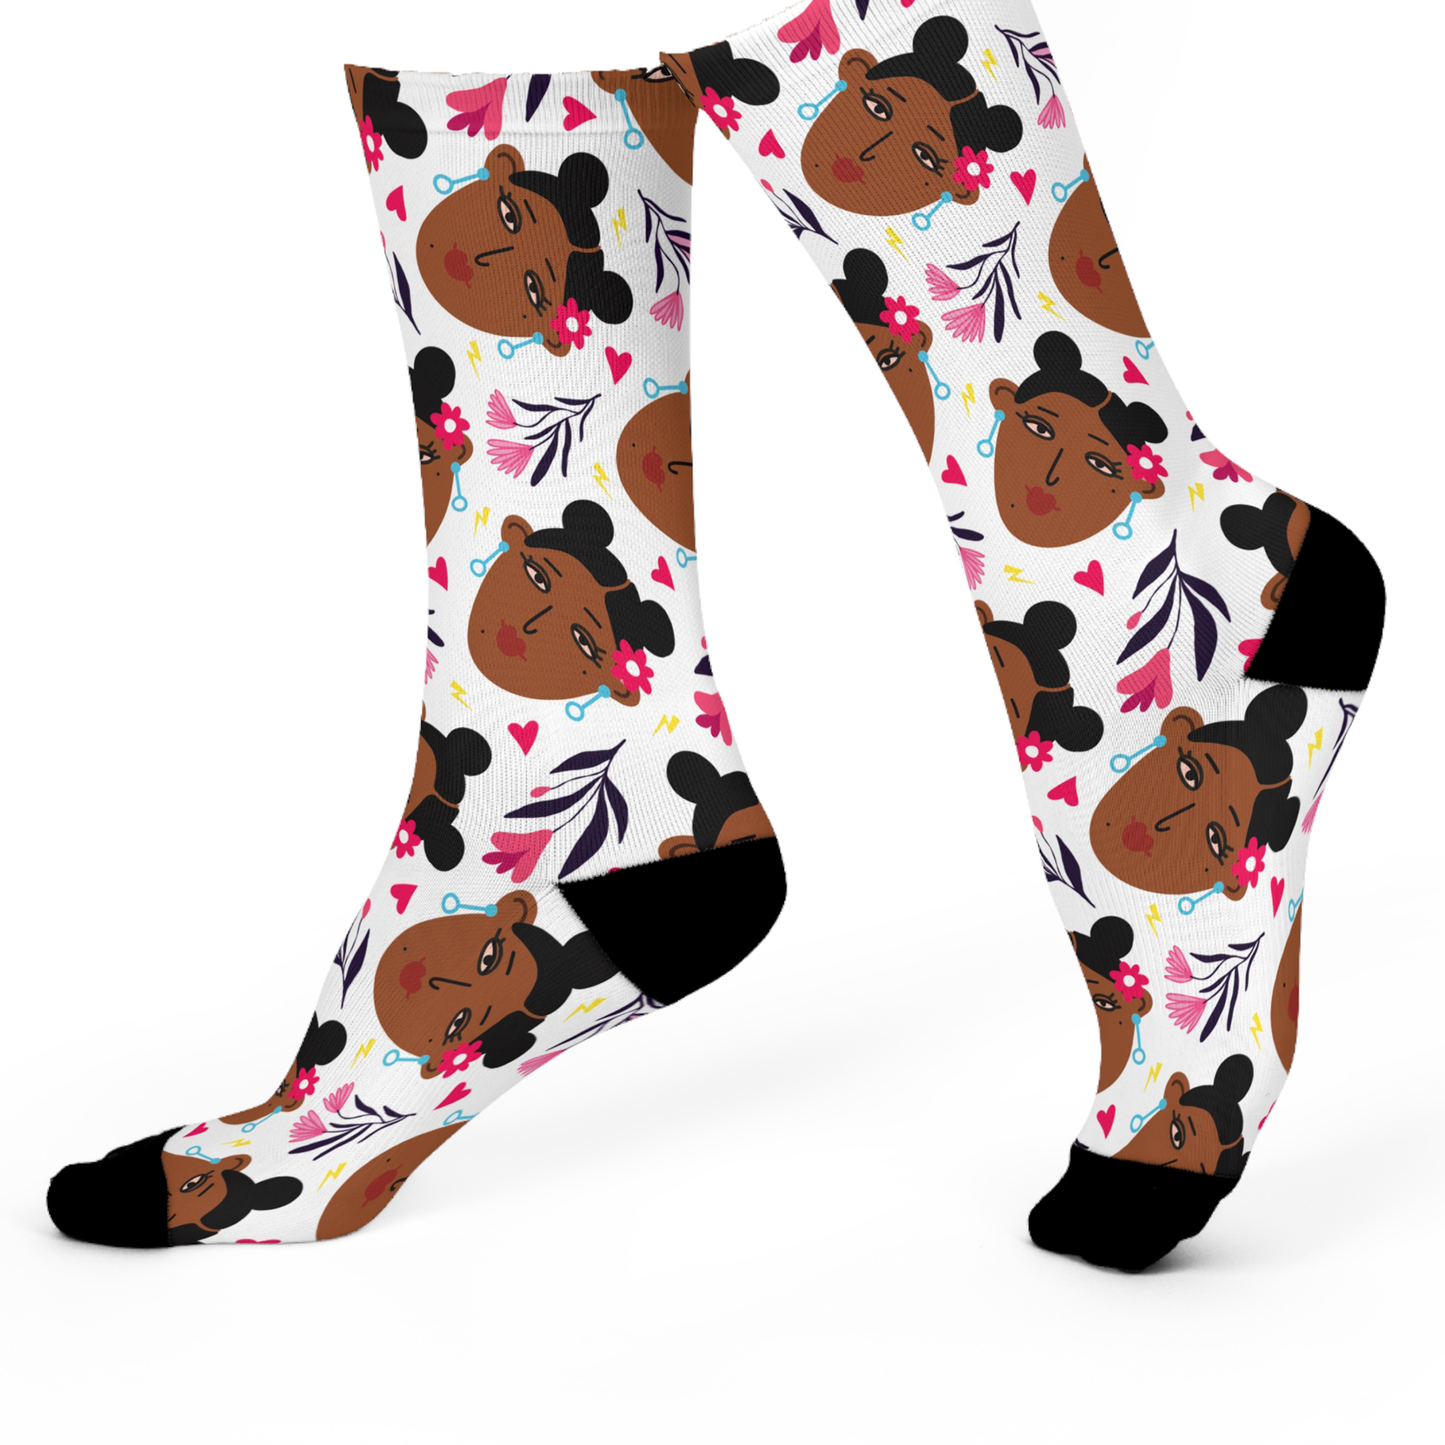 Afro Buns Crew Socks